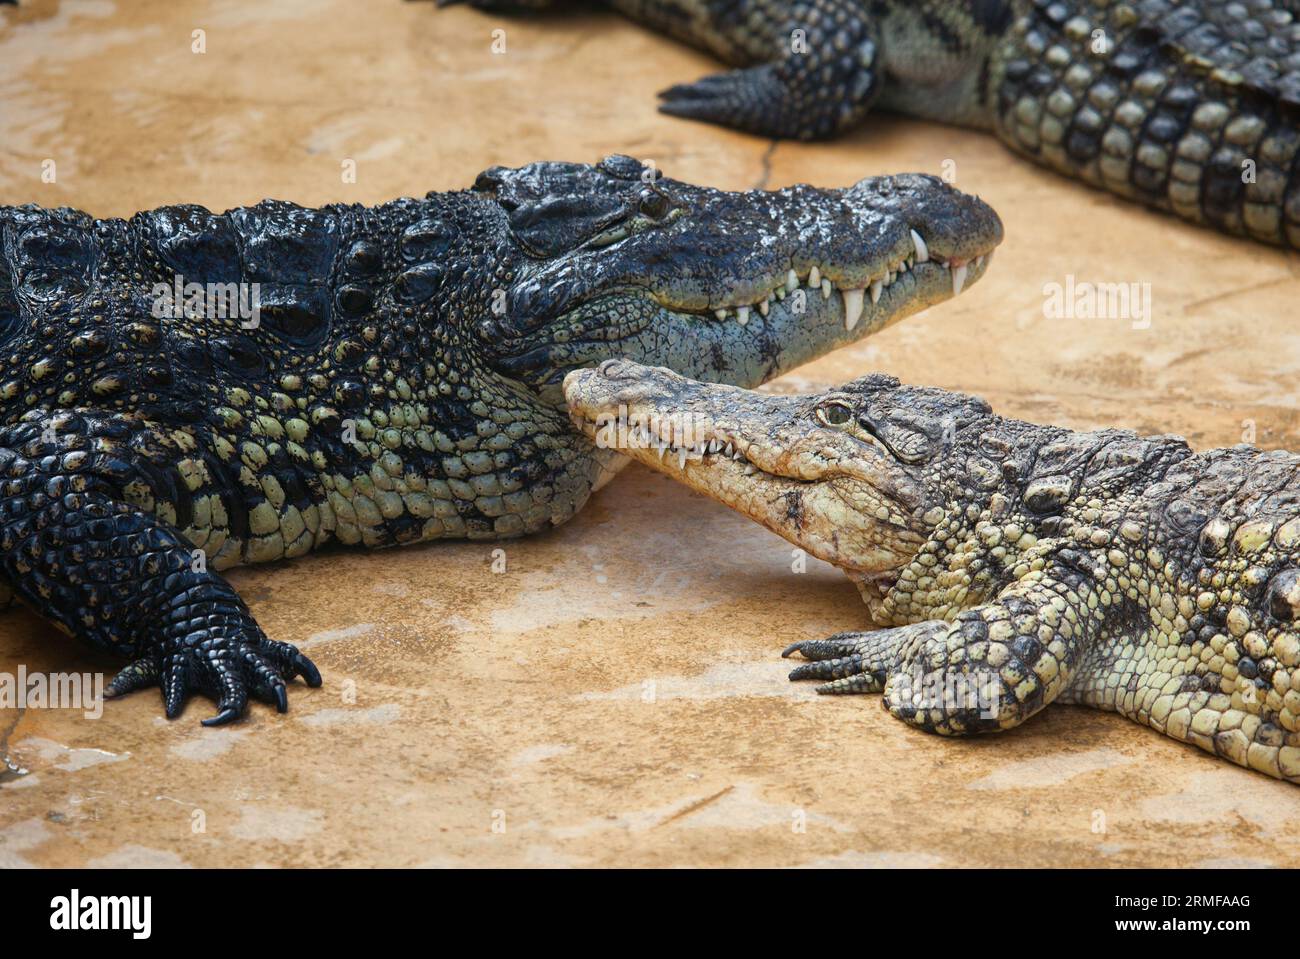 Nile crocodile with its baby Stock Photo